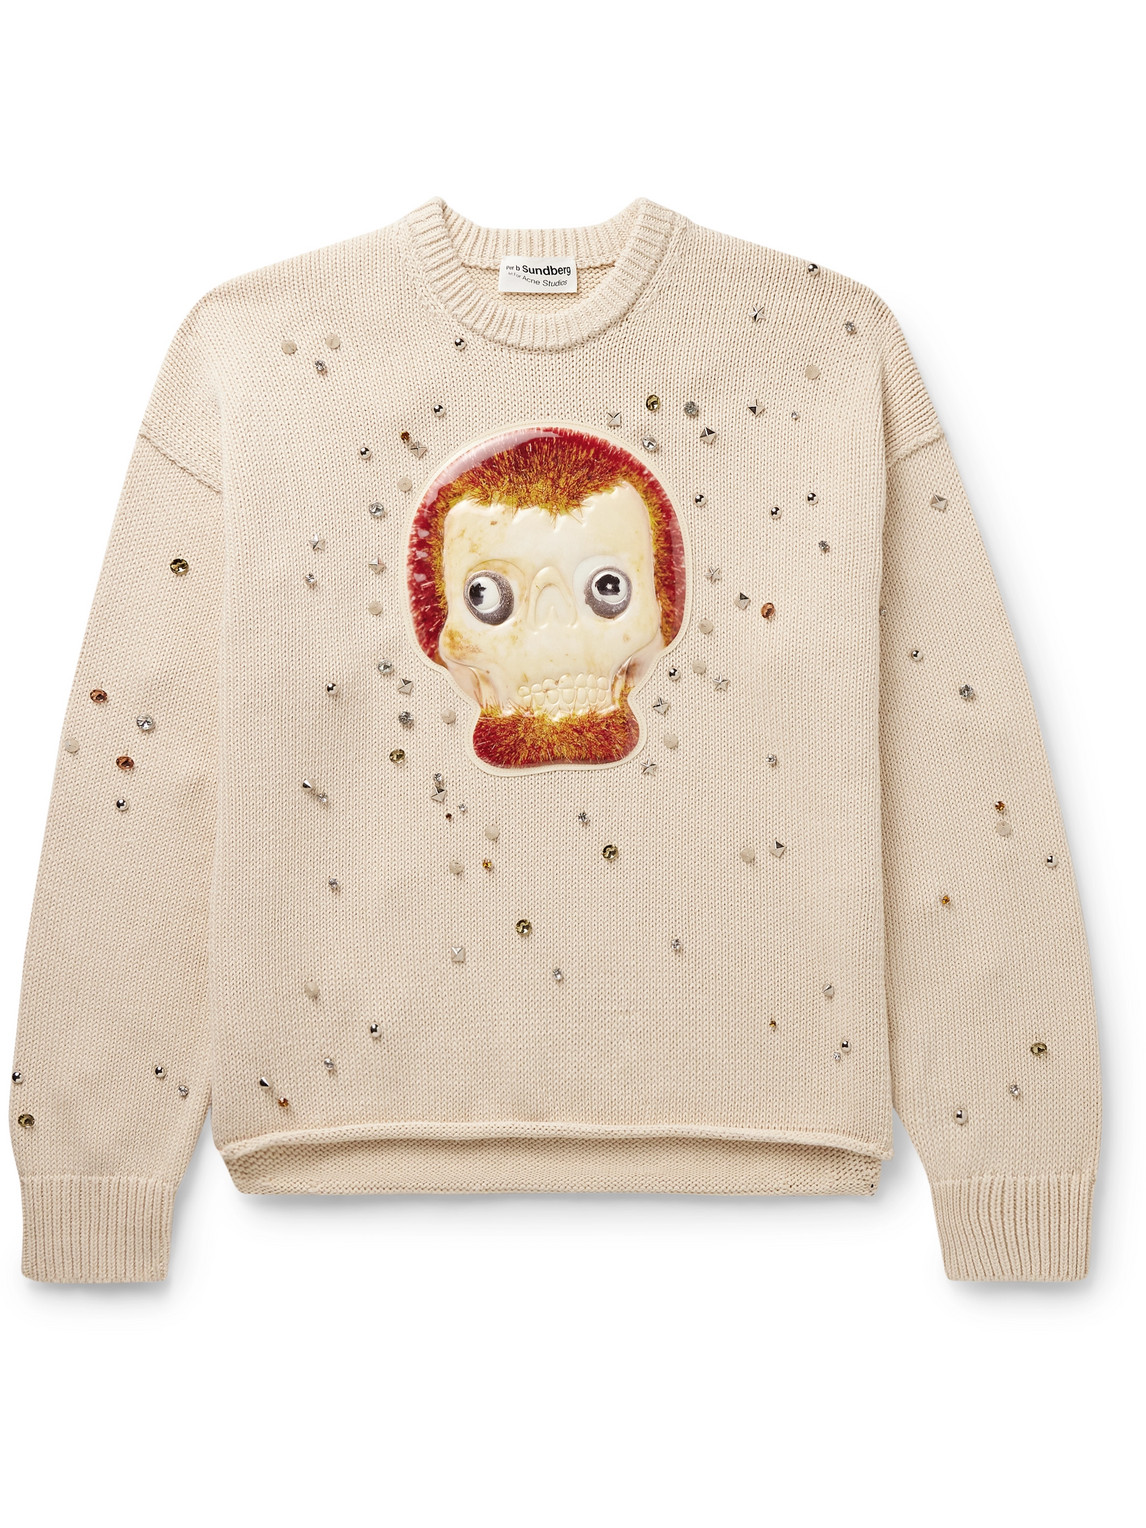 Acne Studios Per B. Sundberg Appliquéd Embellished Cotton-blend Sweater In Neutrals